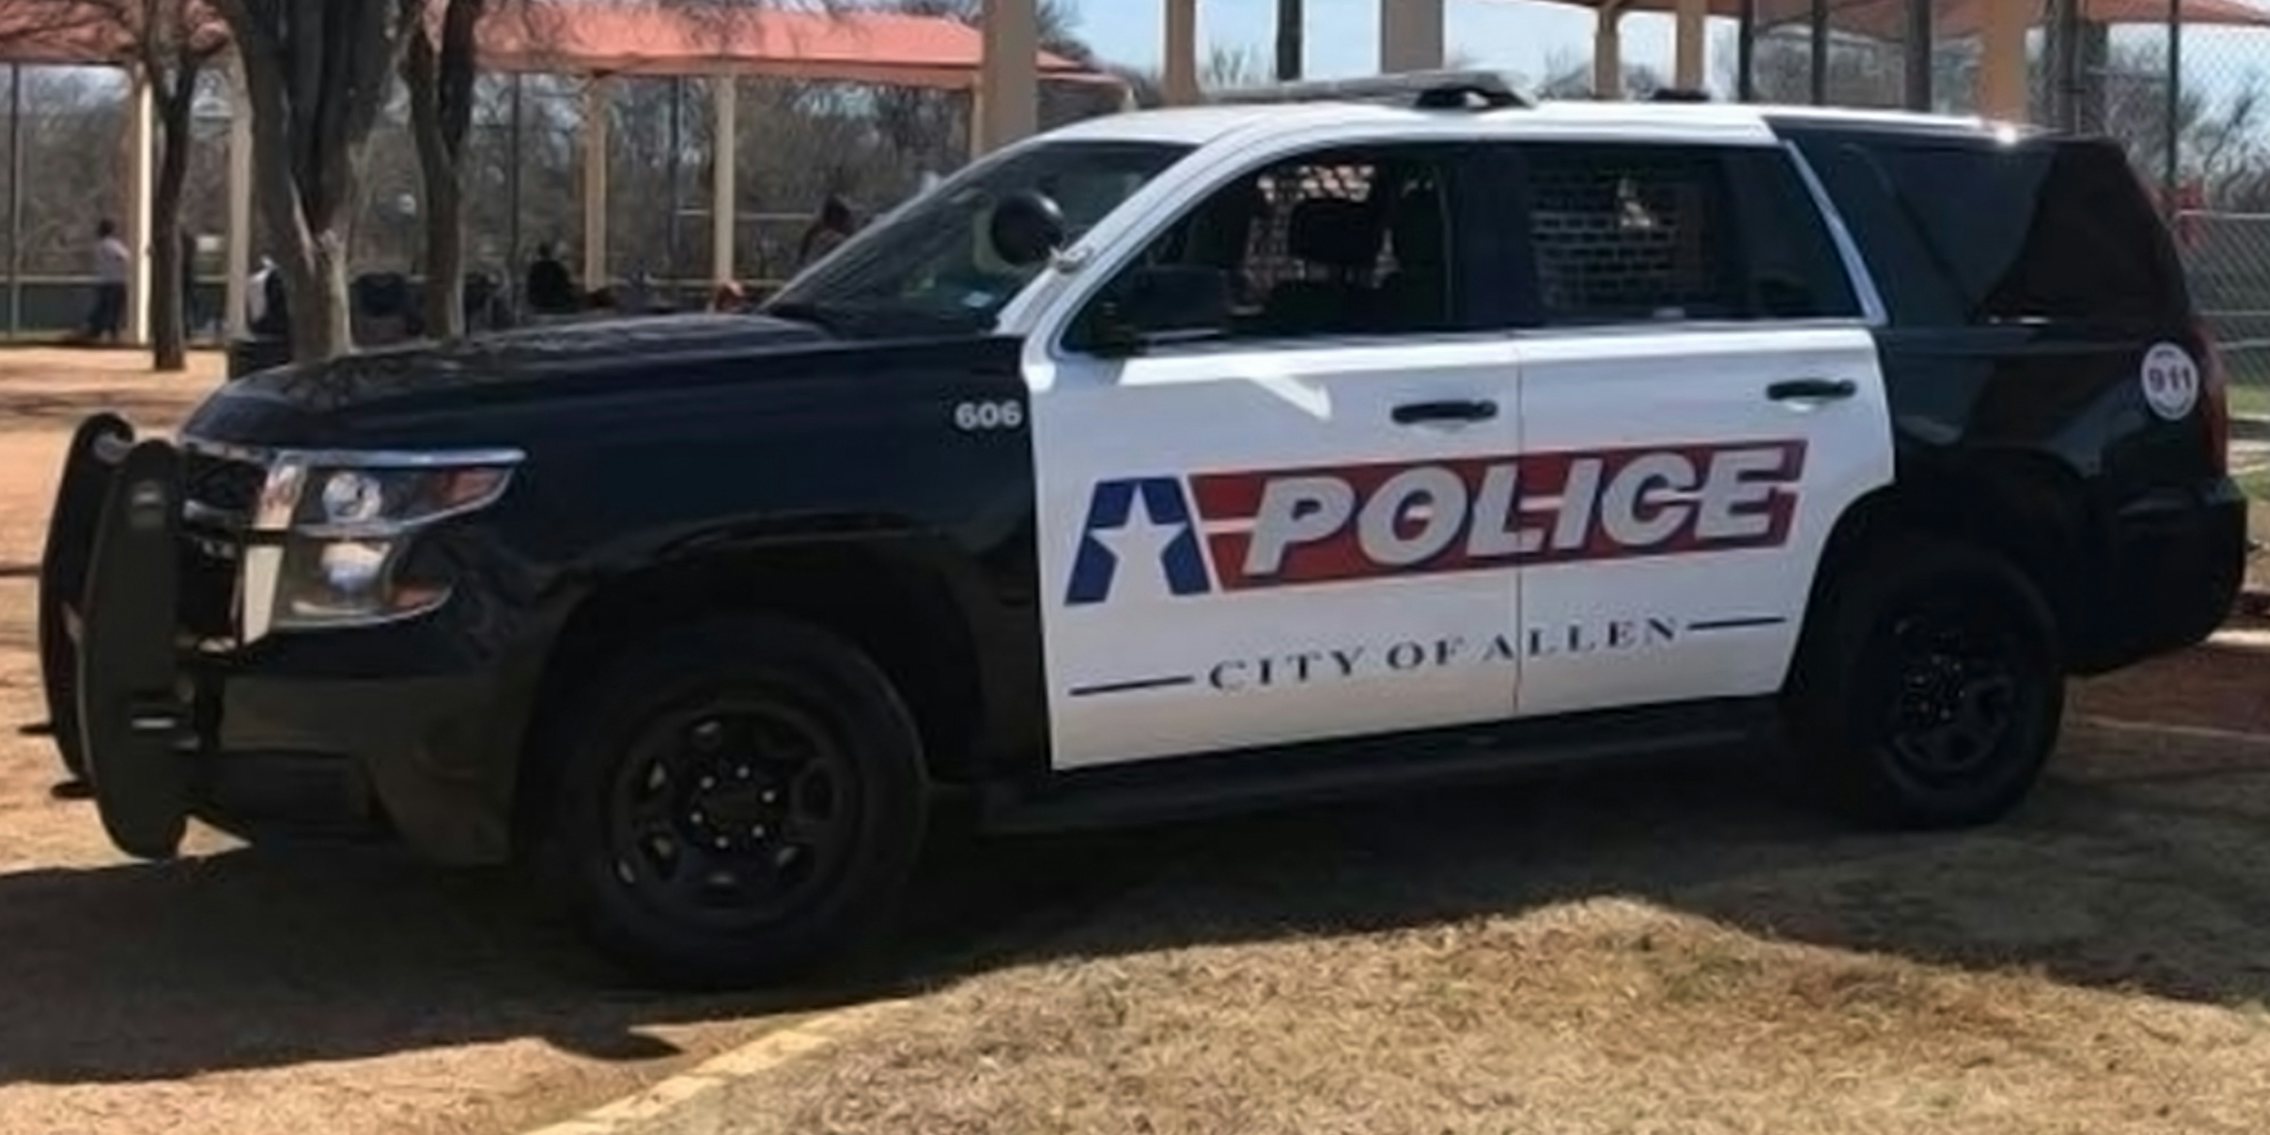 City of Allen Police car